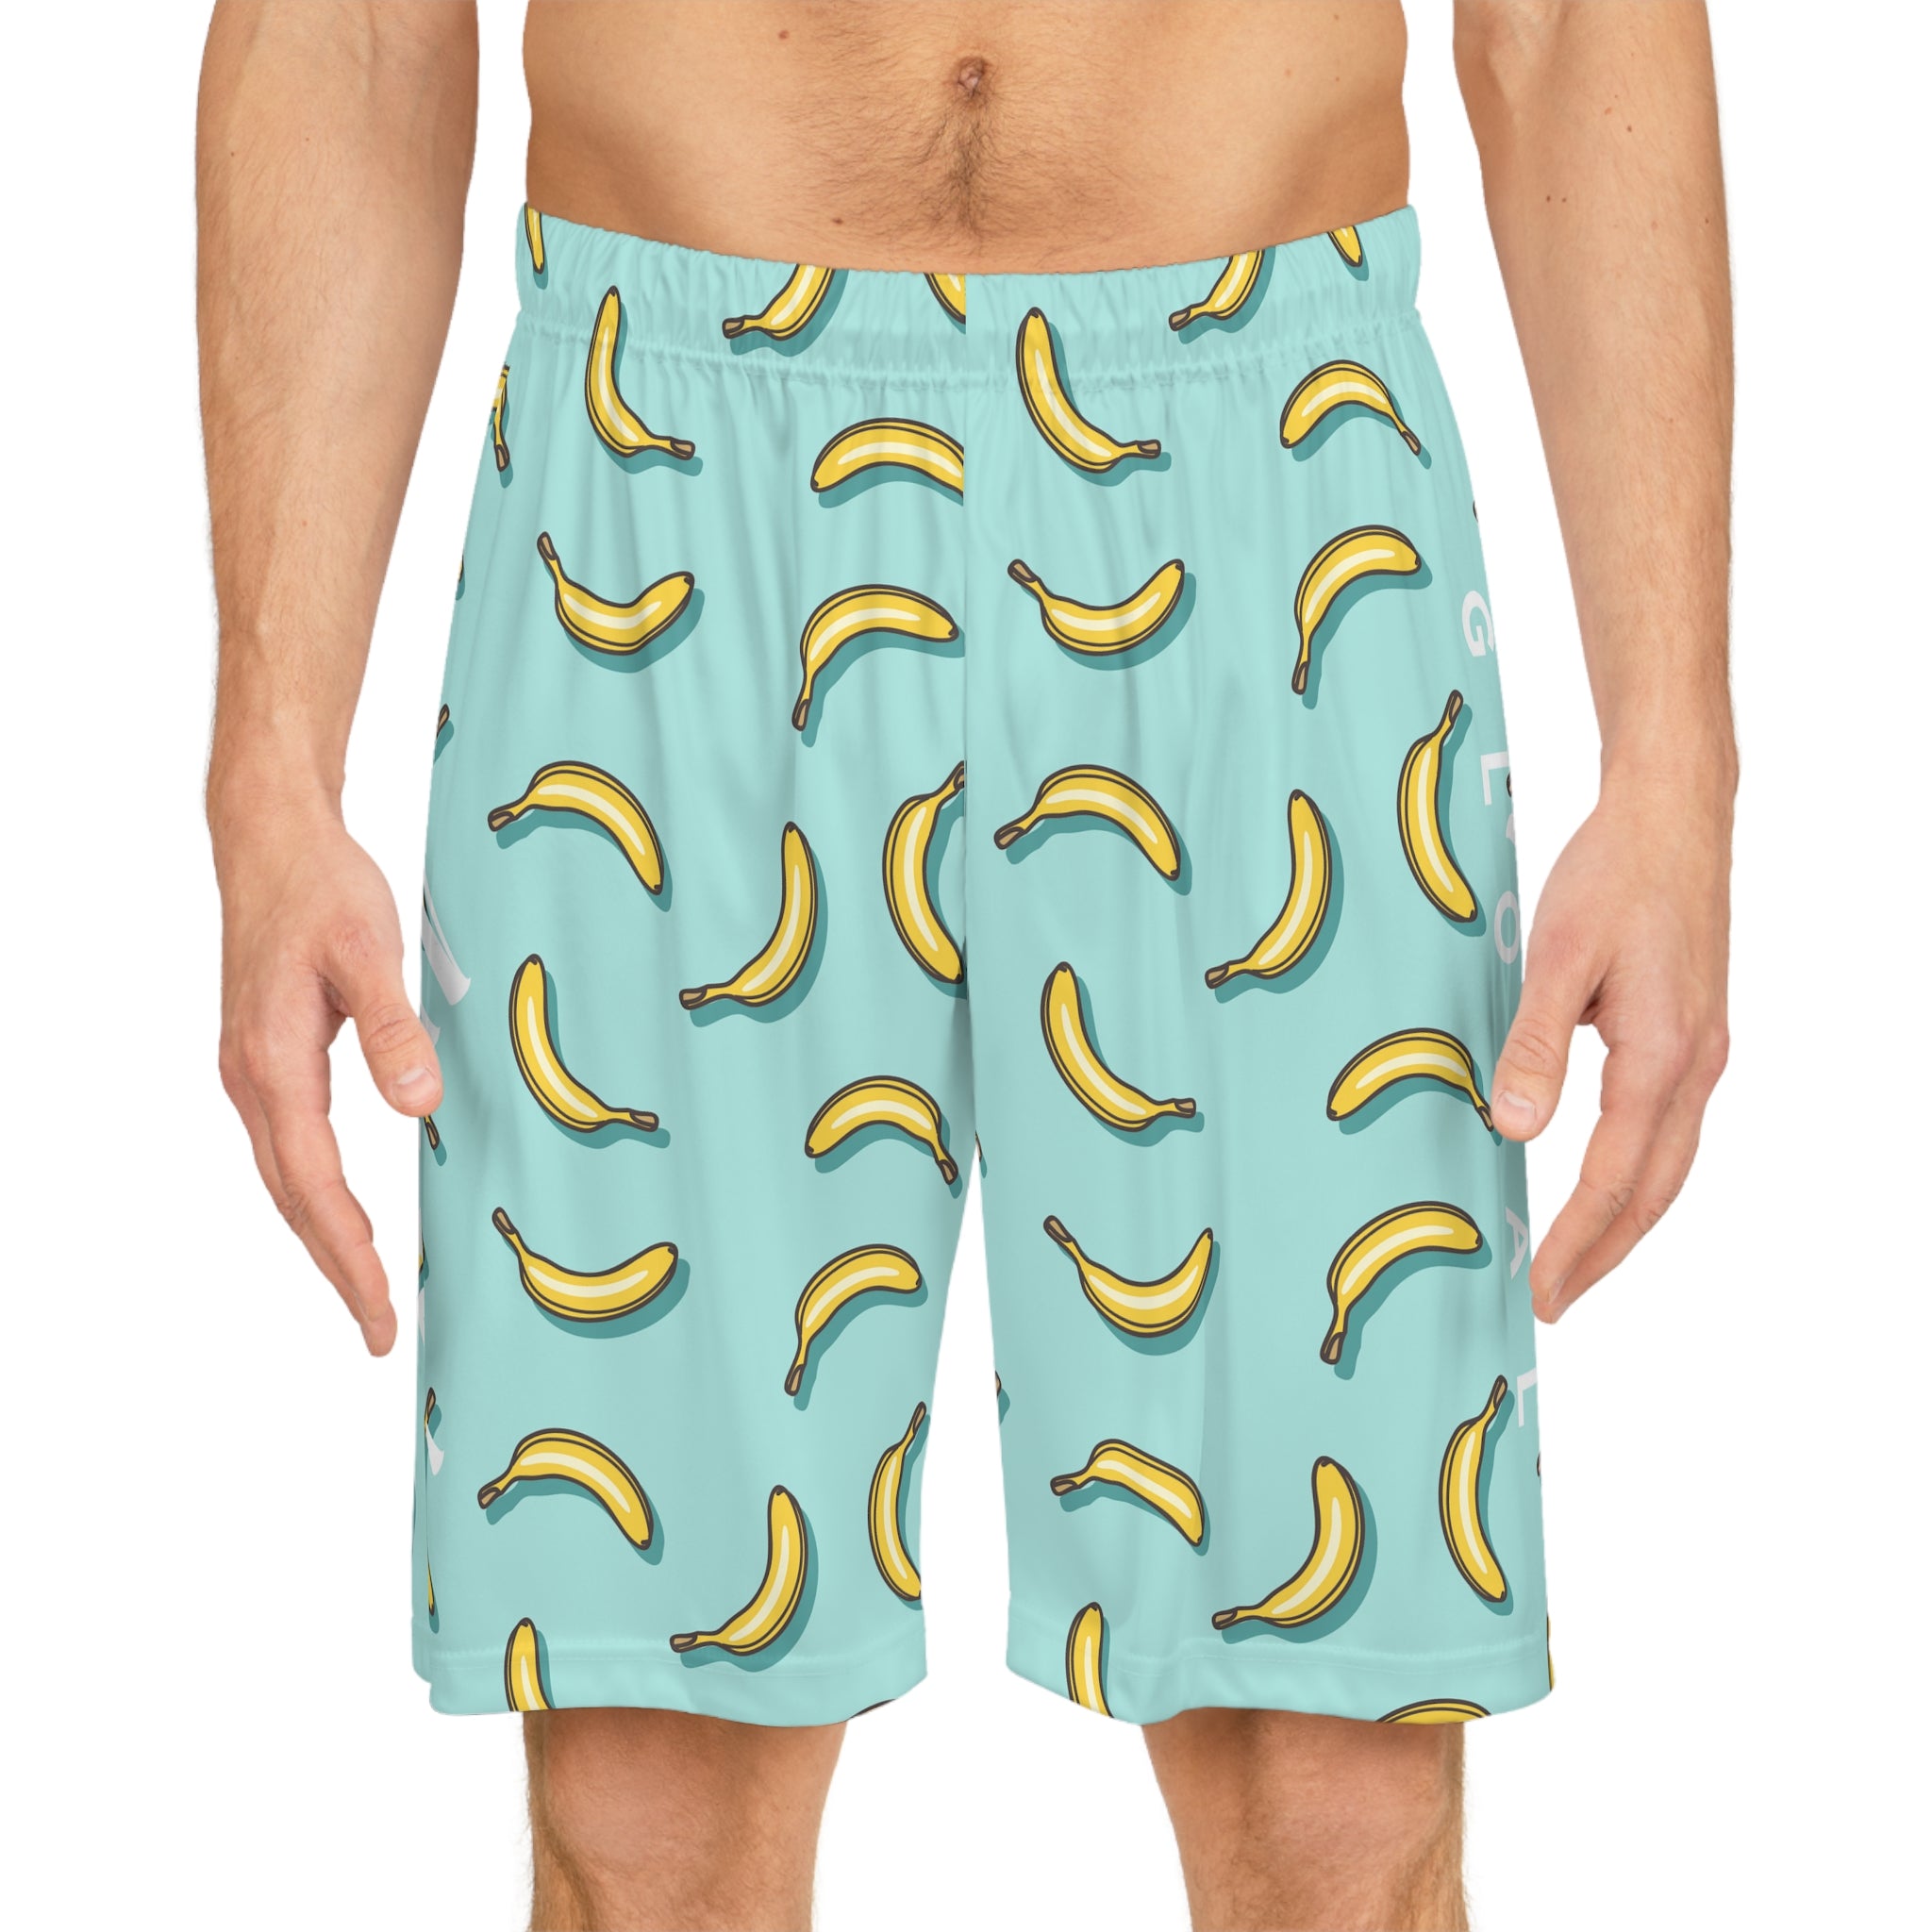 Bananarama Shorts